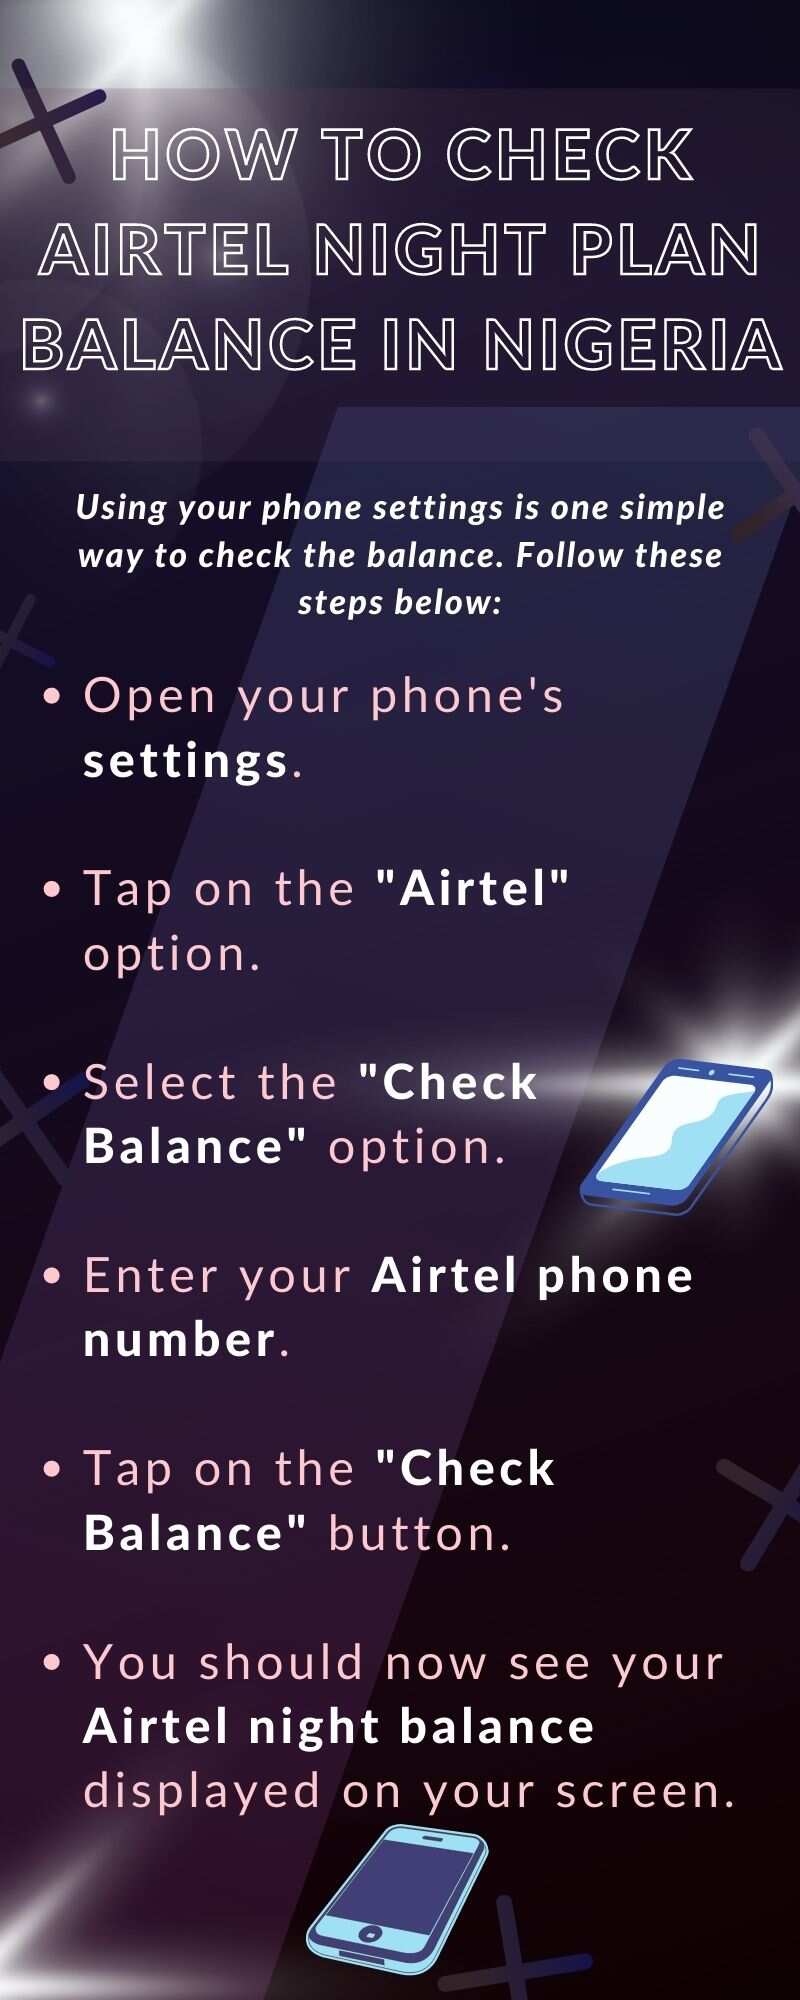 How to check Airtel night plan balance in Nigeria